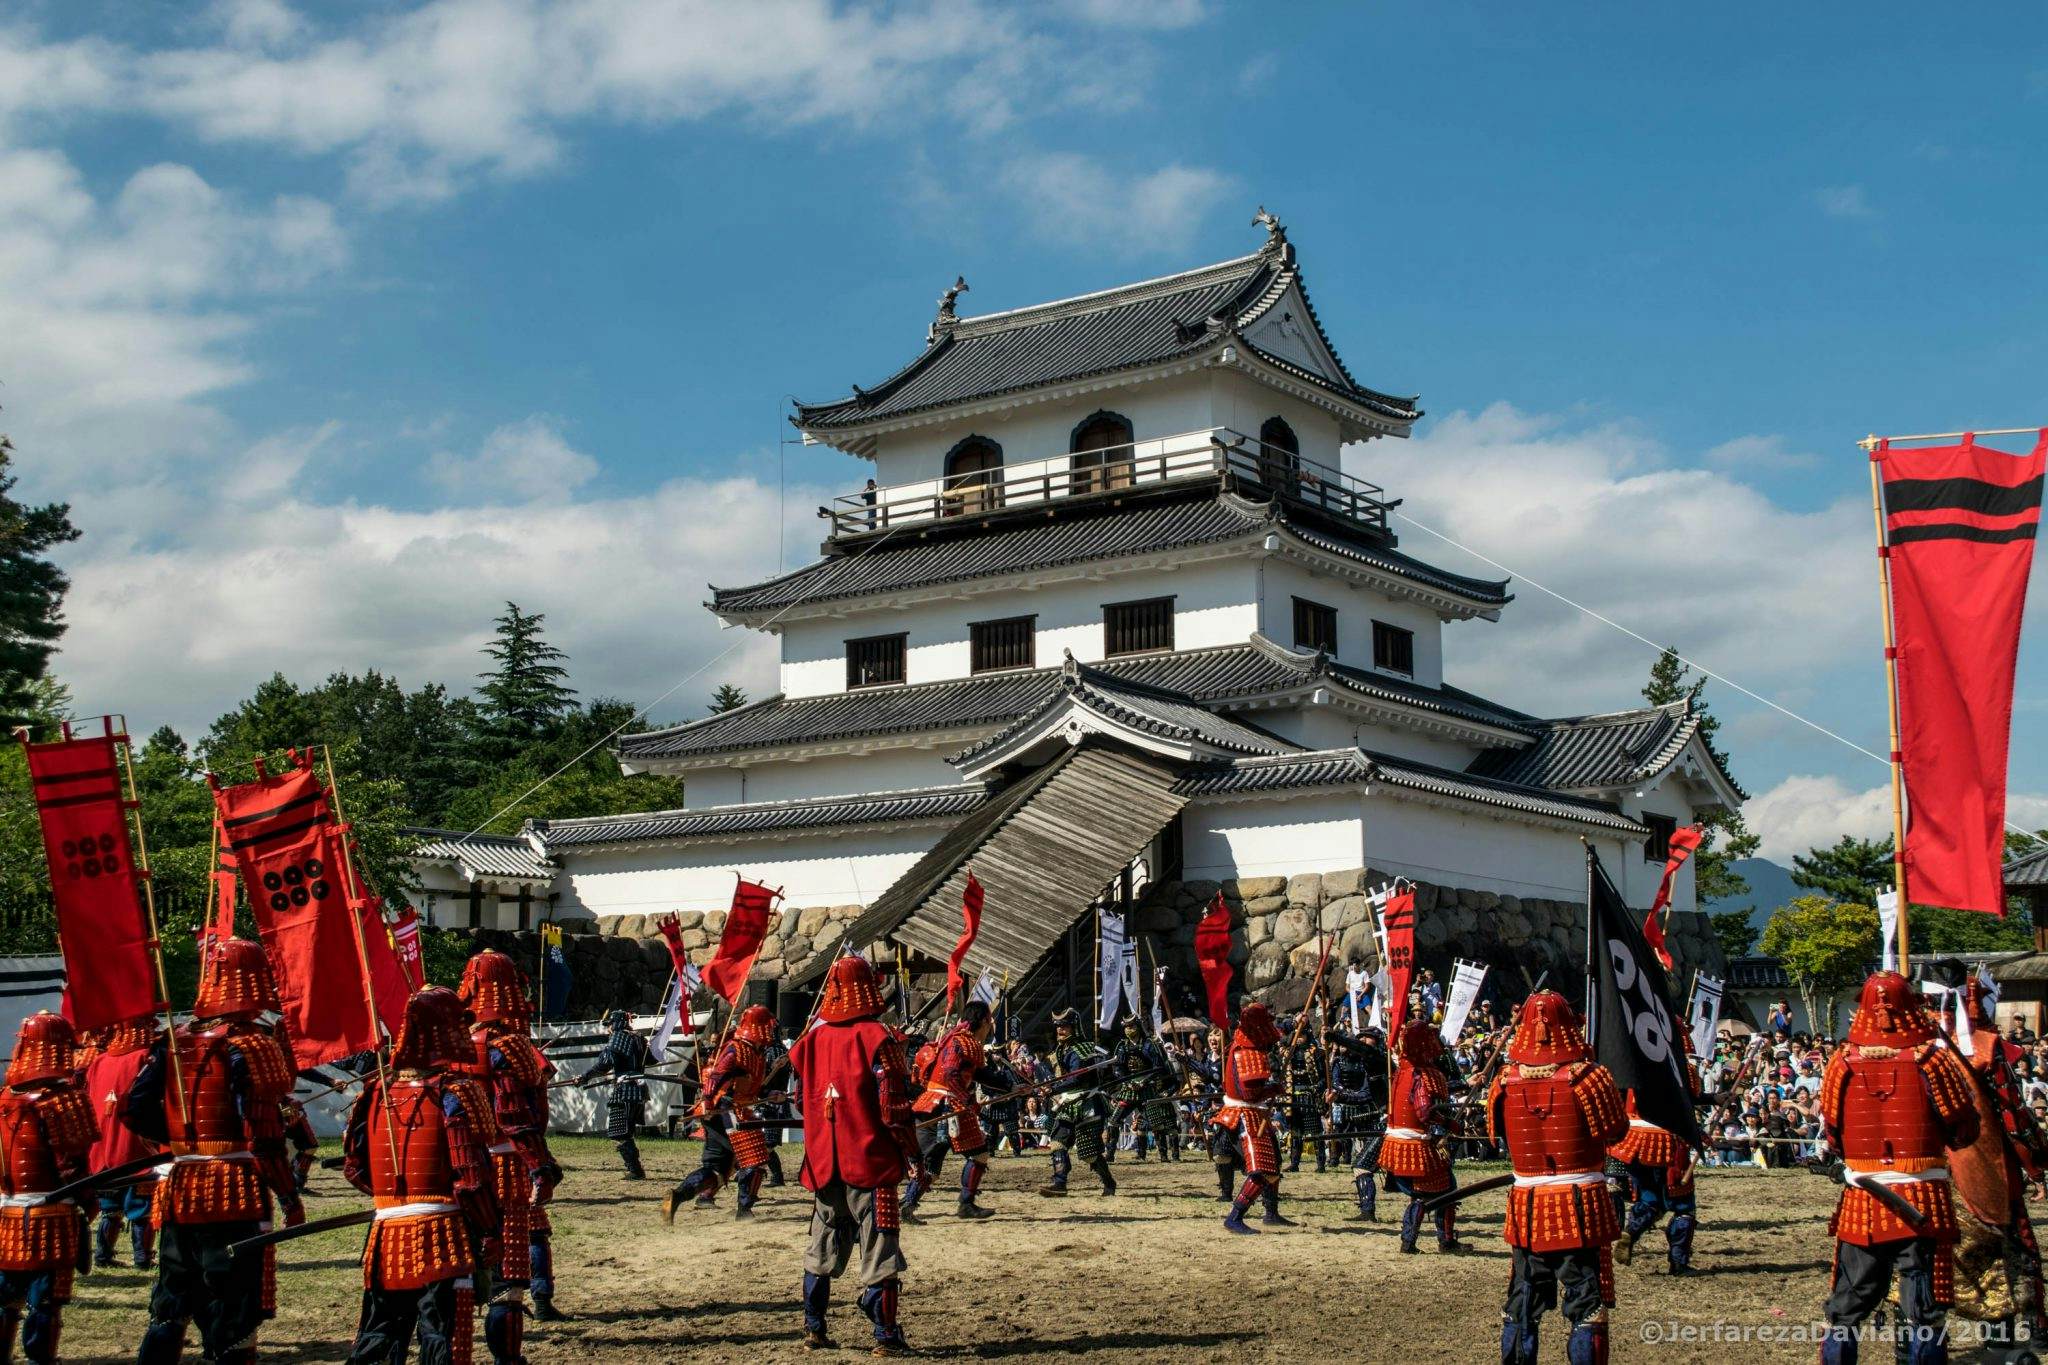 When Swords Collide: Shiroishi Onikojuro Festival